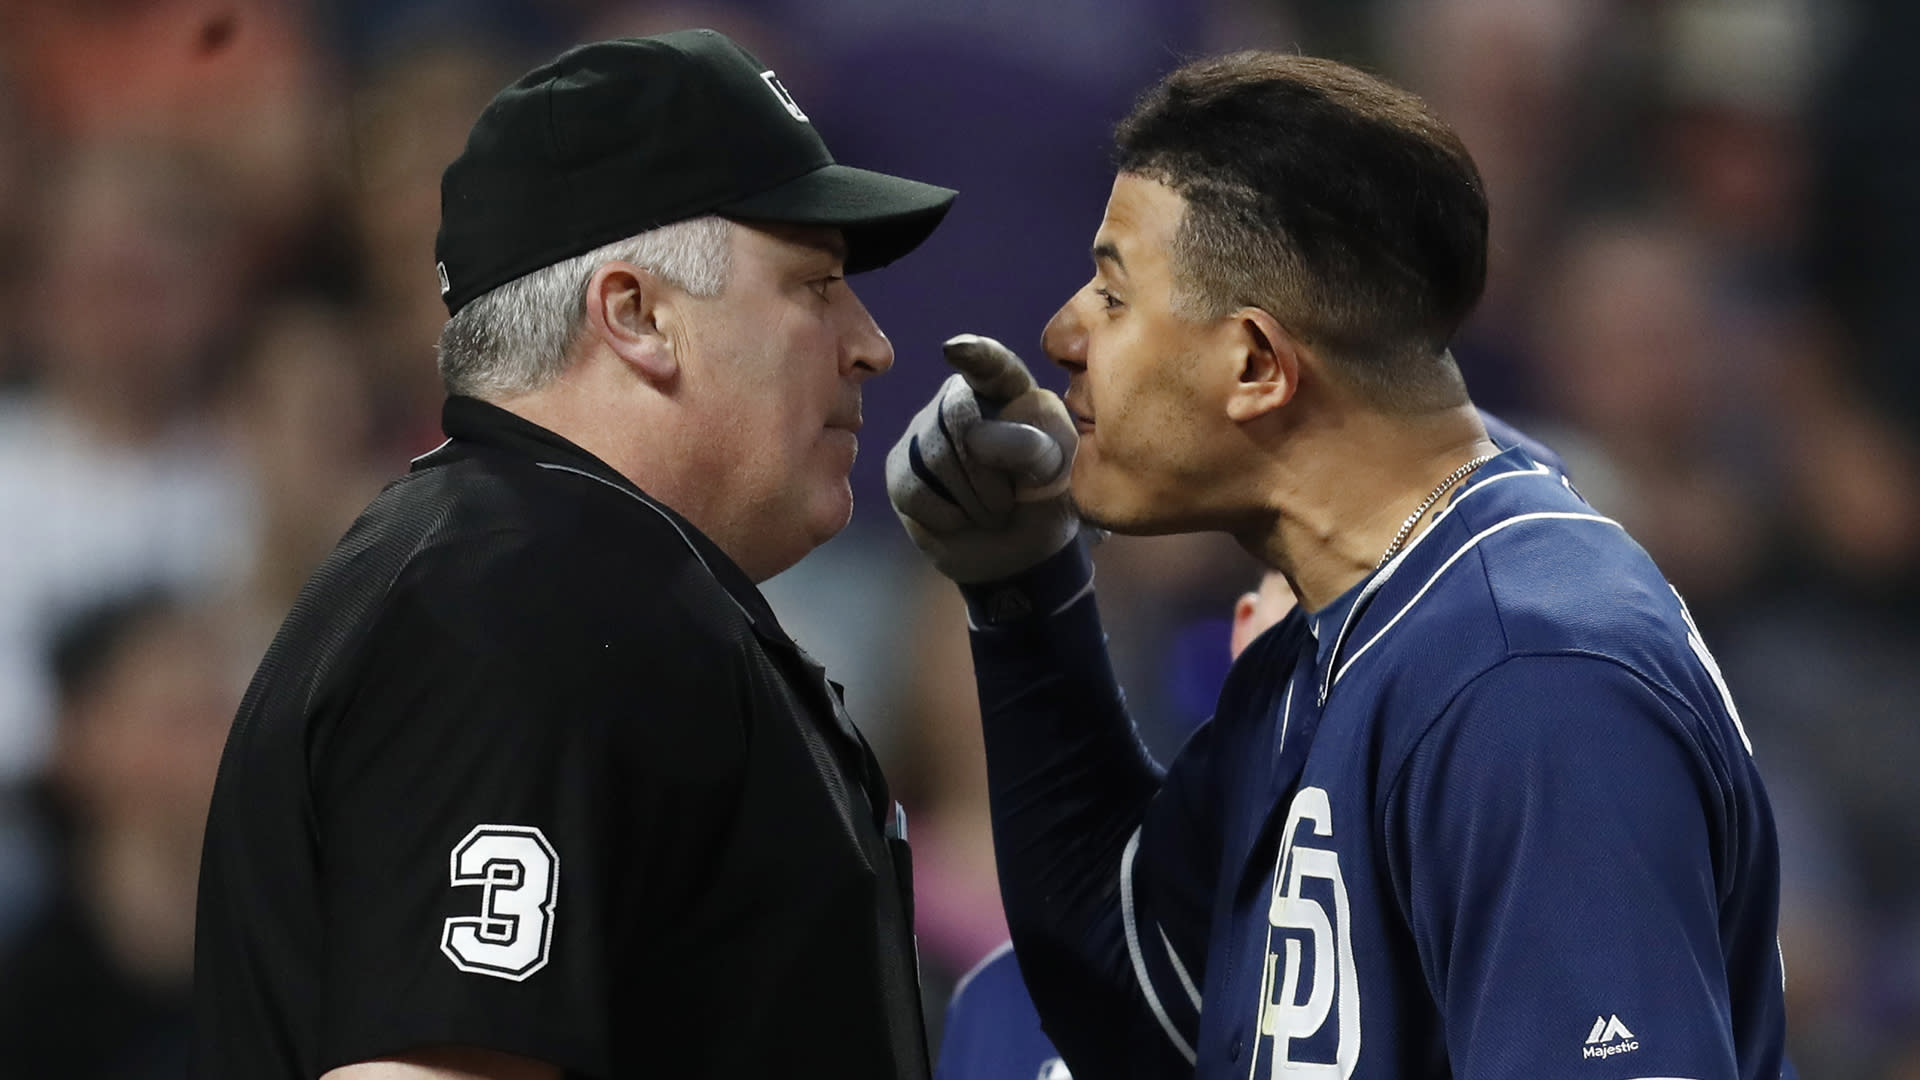 MLB umpire going to bat for teen at center of Lakewood youth baseball brawl